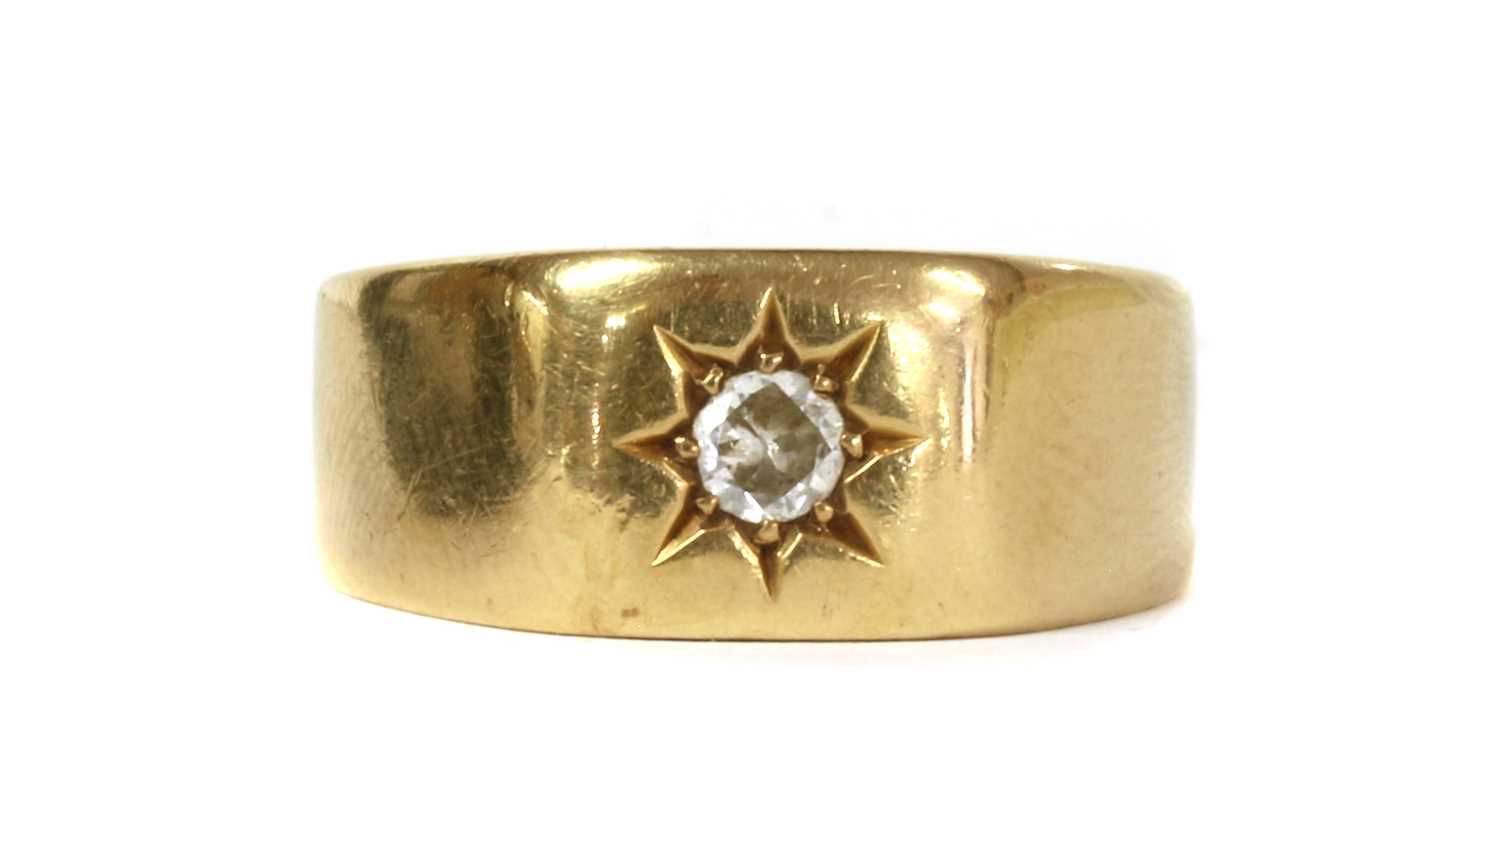 Lot 8 - An 18ct gold single stone diamond set signet ring, by Bravingtons